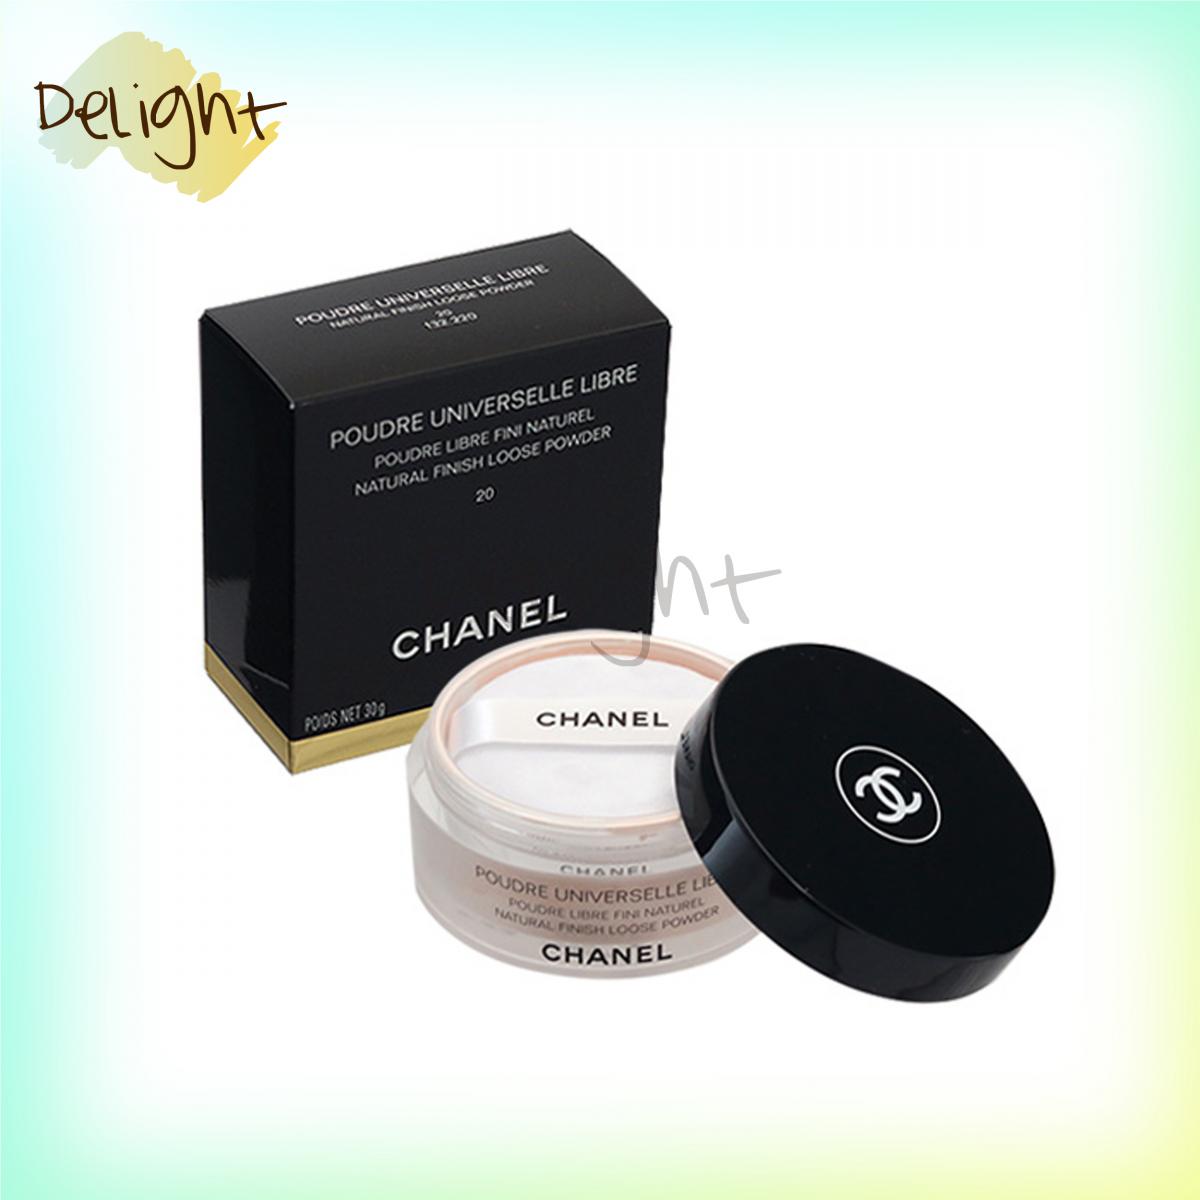 Qoo10 - Chanel Poudre Universelle Libre - 20 (Clair) 30g : Cosmetics